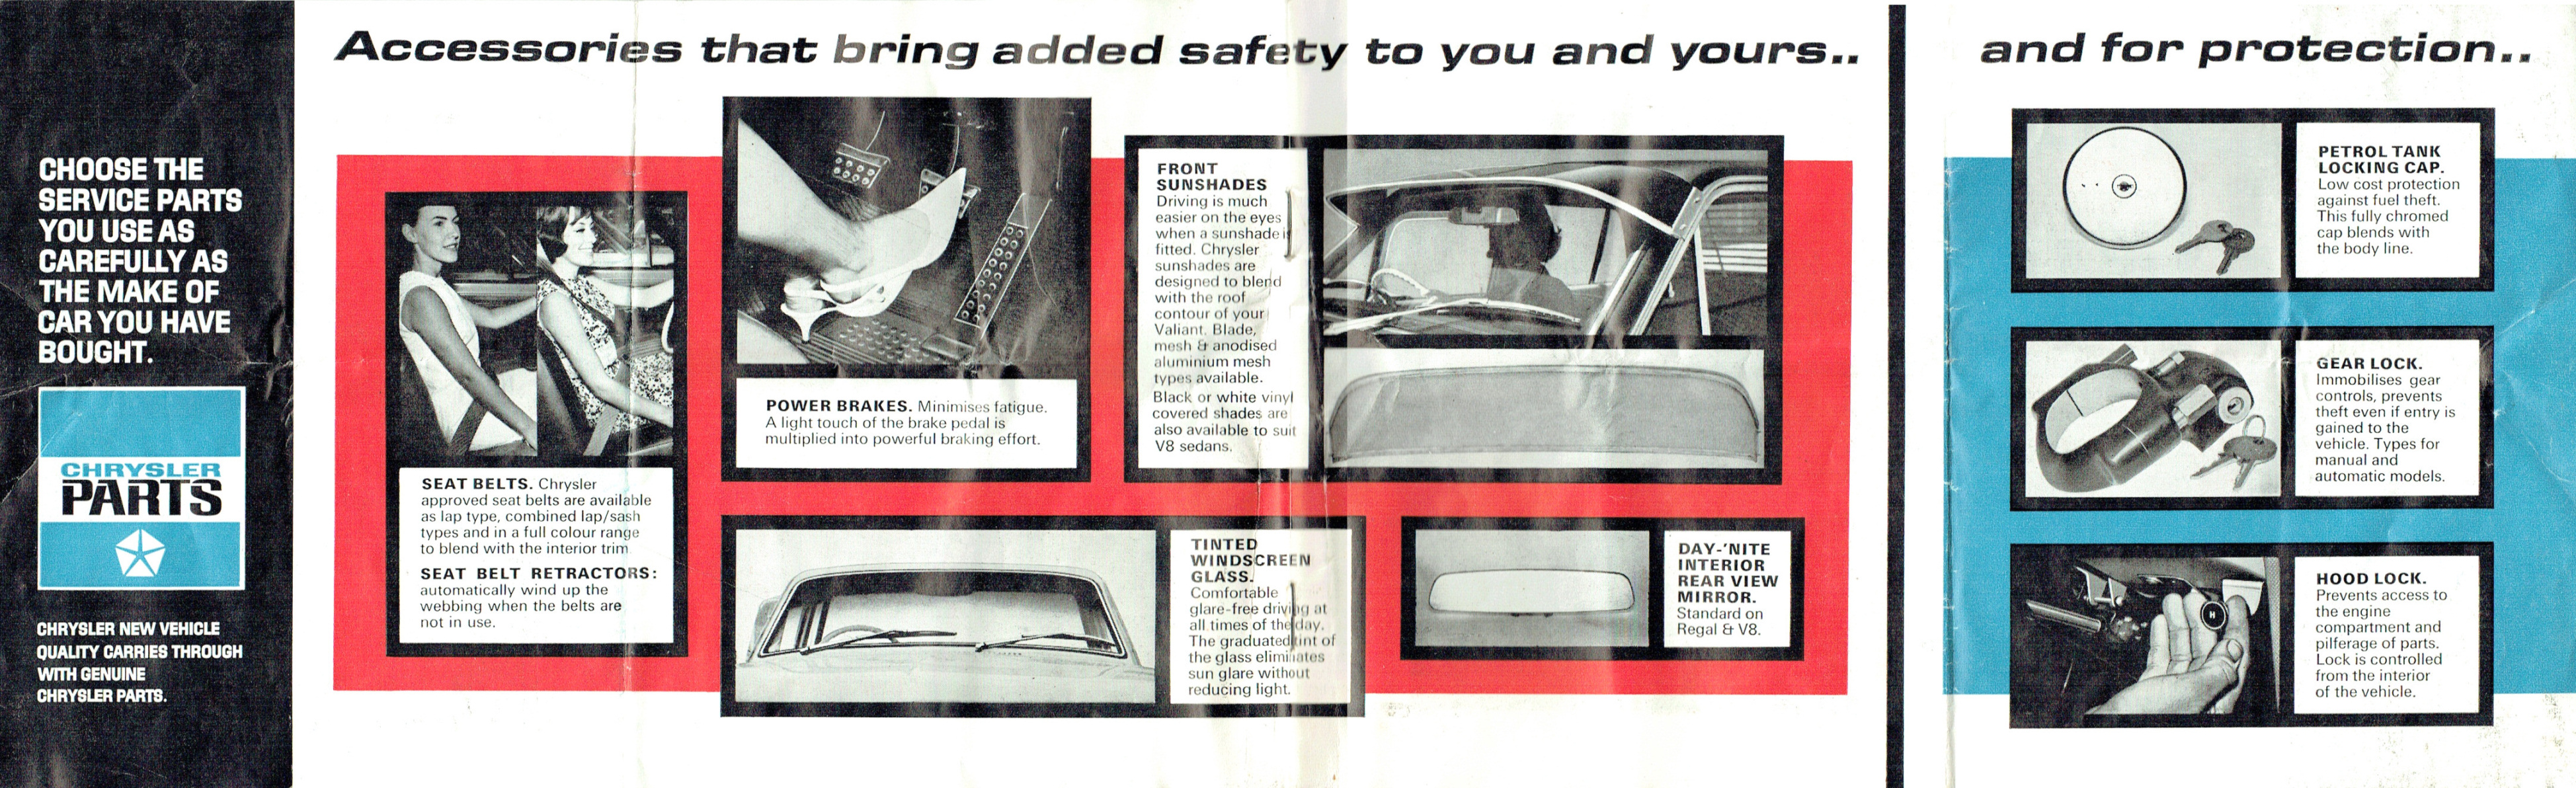 1966_Chrysler_VC_Valiant_Accessories-04-05